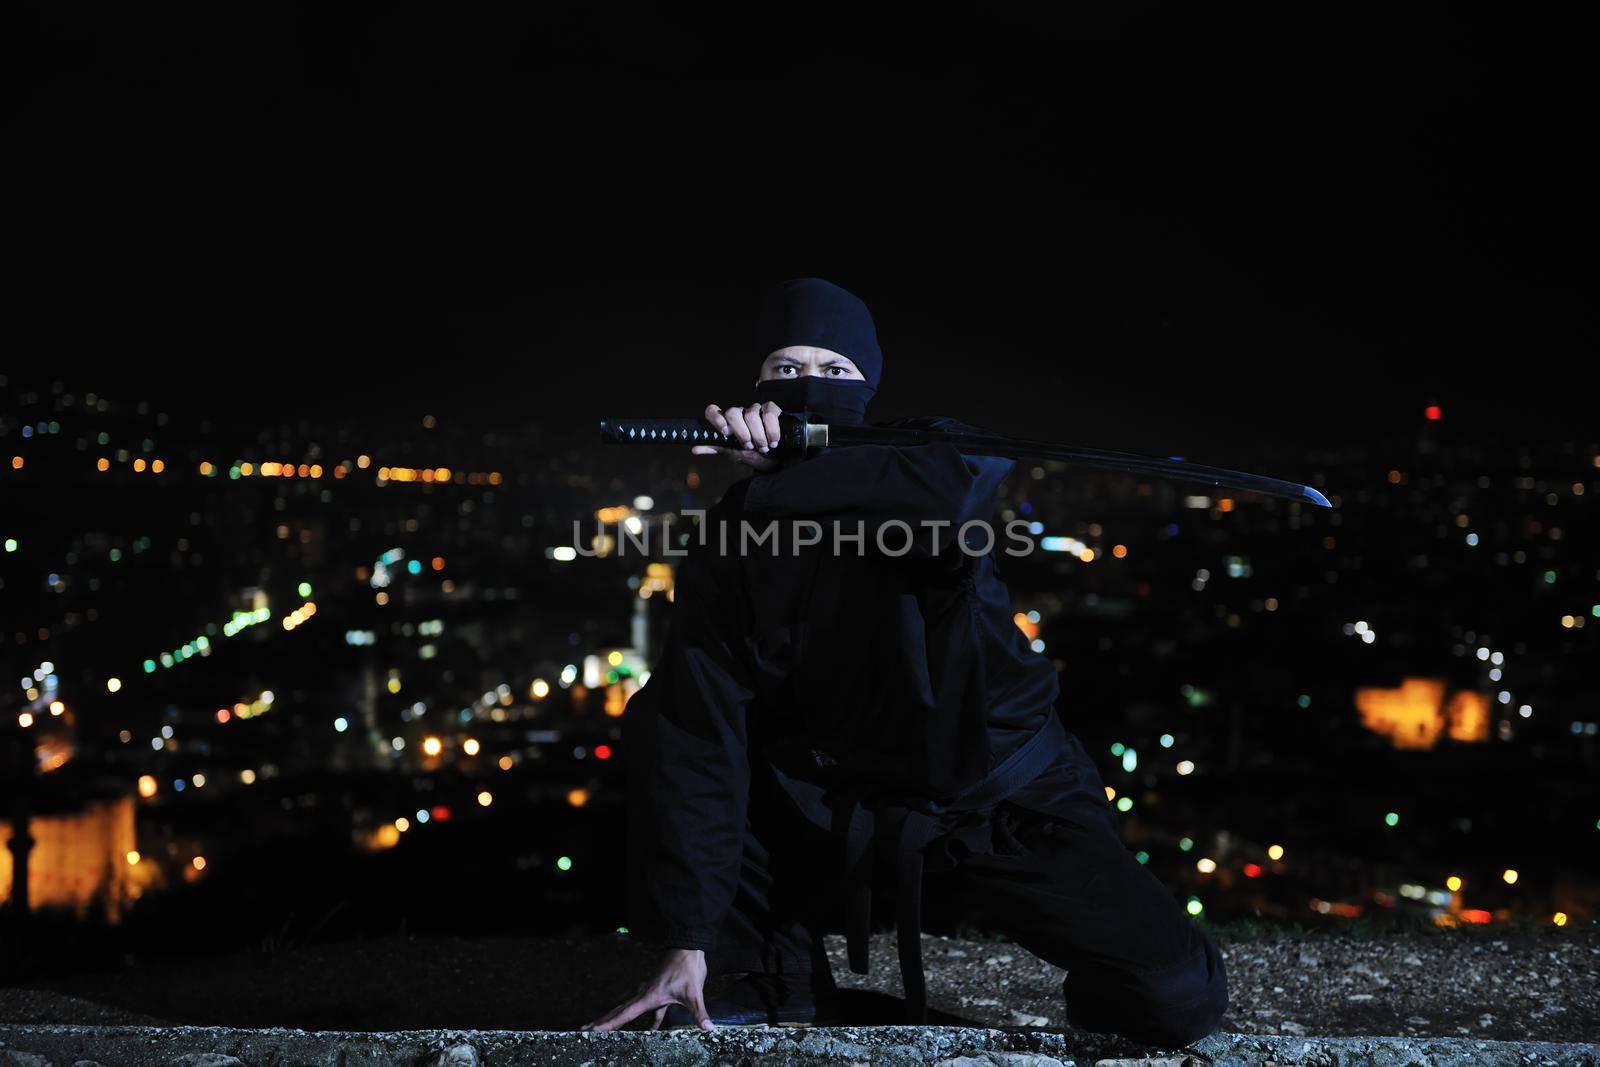 ninja assasin hold katana samurai old martial weapon swordat night with city lights in background